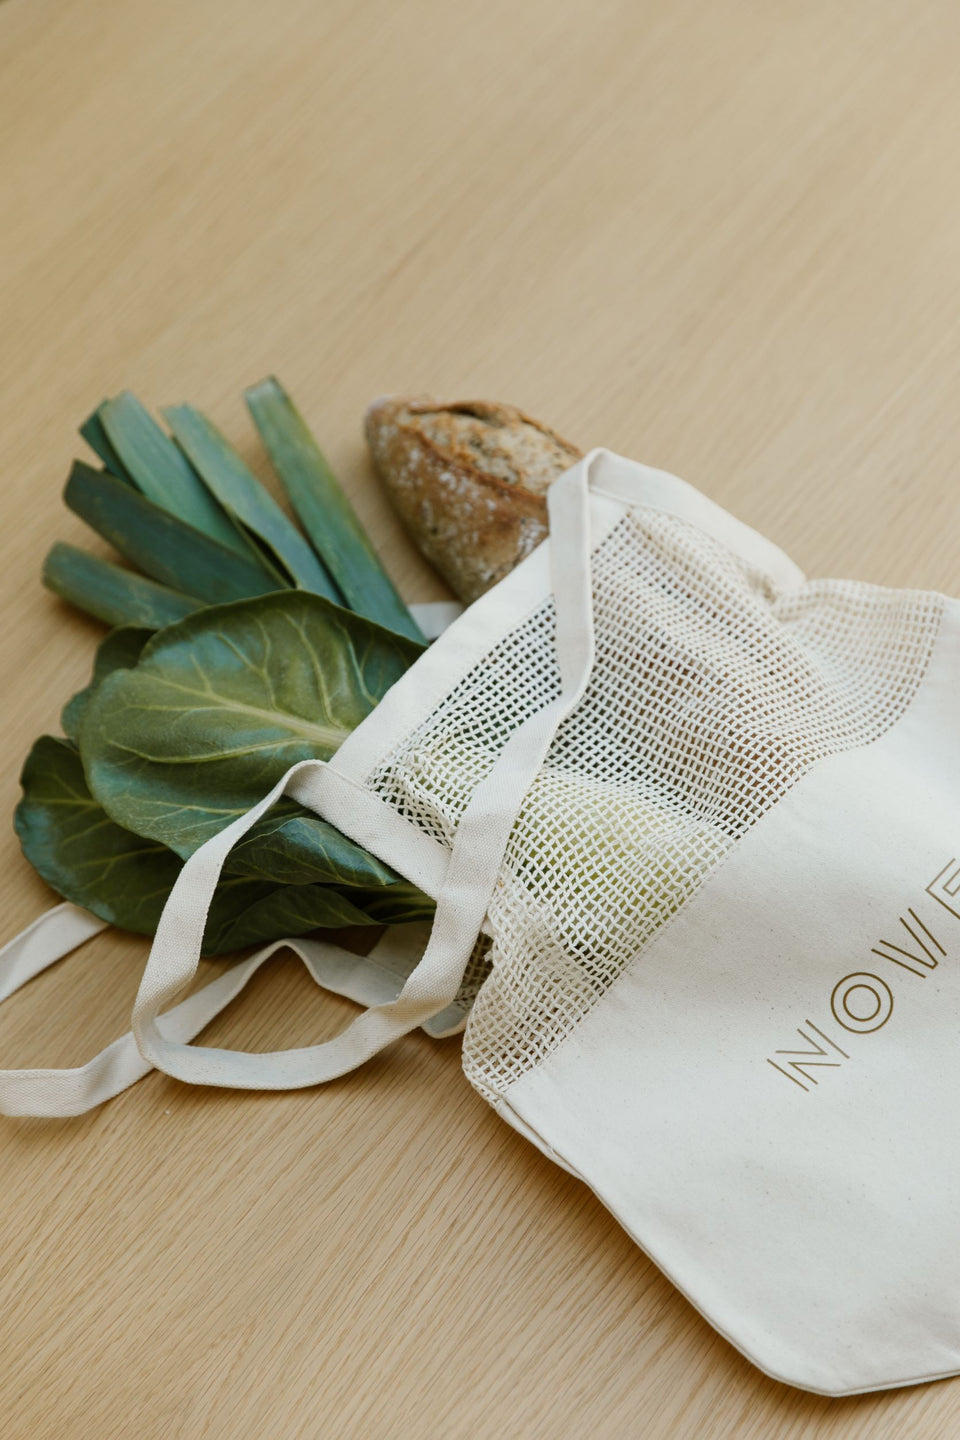 100 % Organic Cotton Mesh Bag - sieťová taška